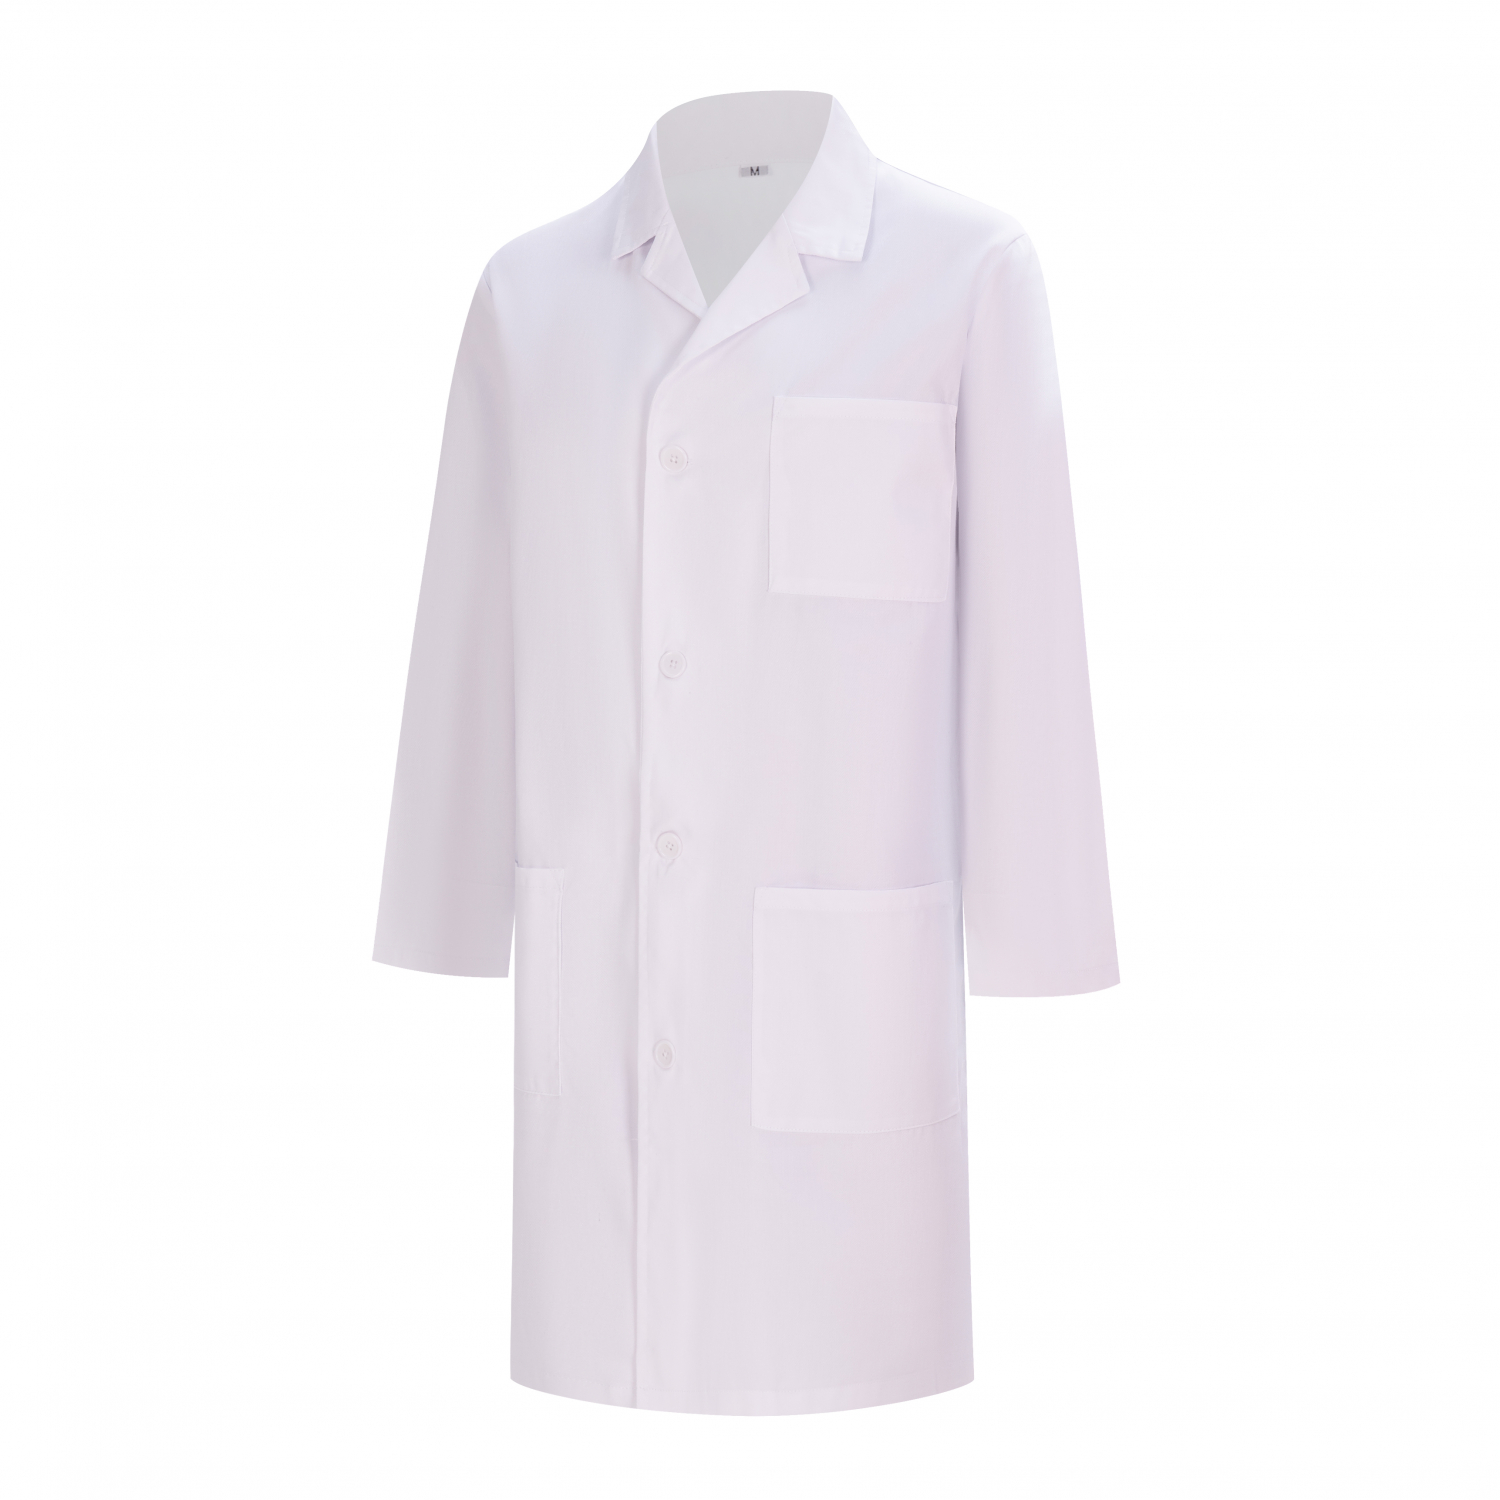 Laboratoriumjas voor dames - Medische uniformen - Witte jas  8166